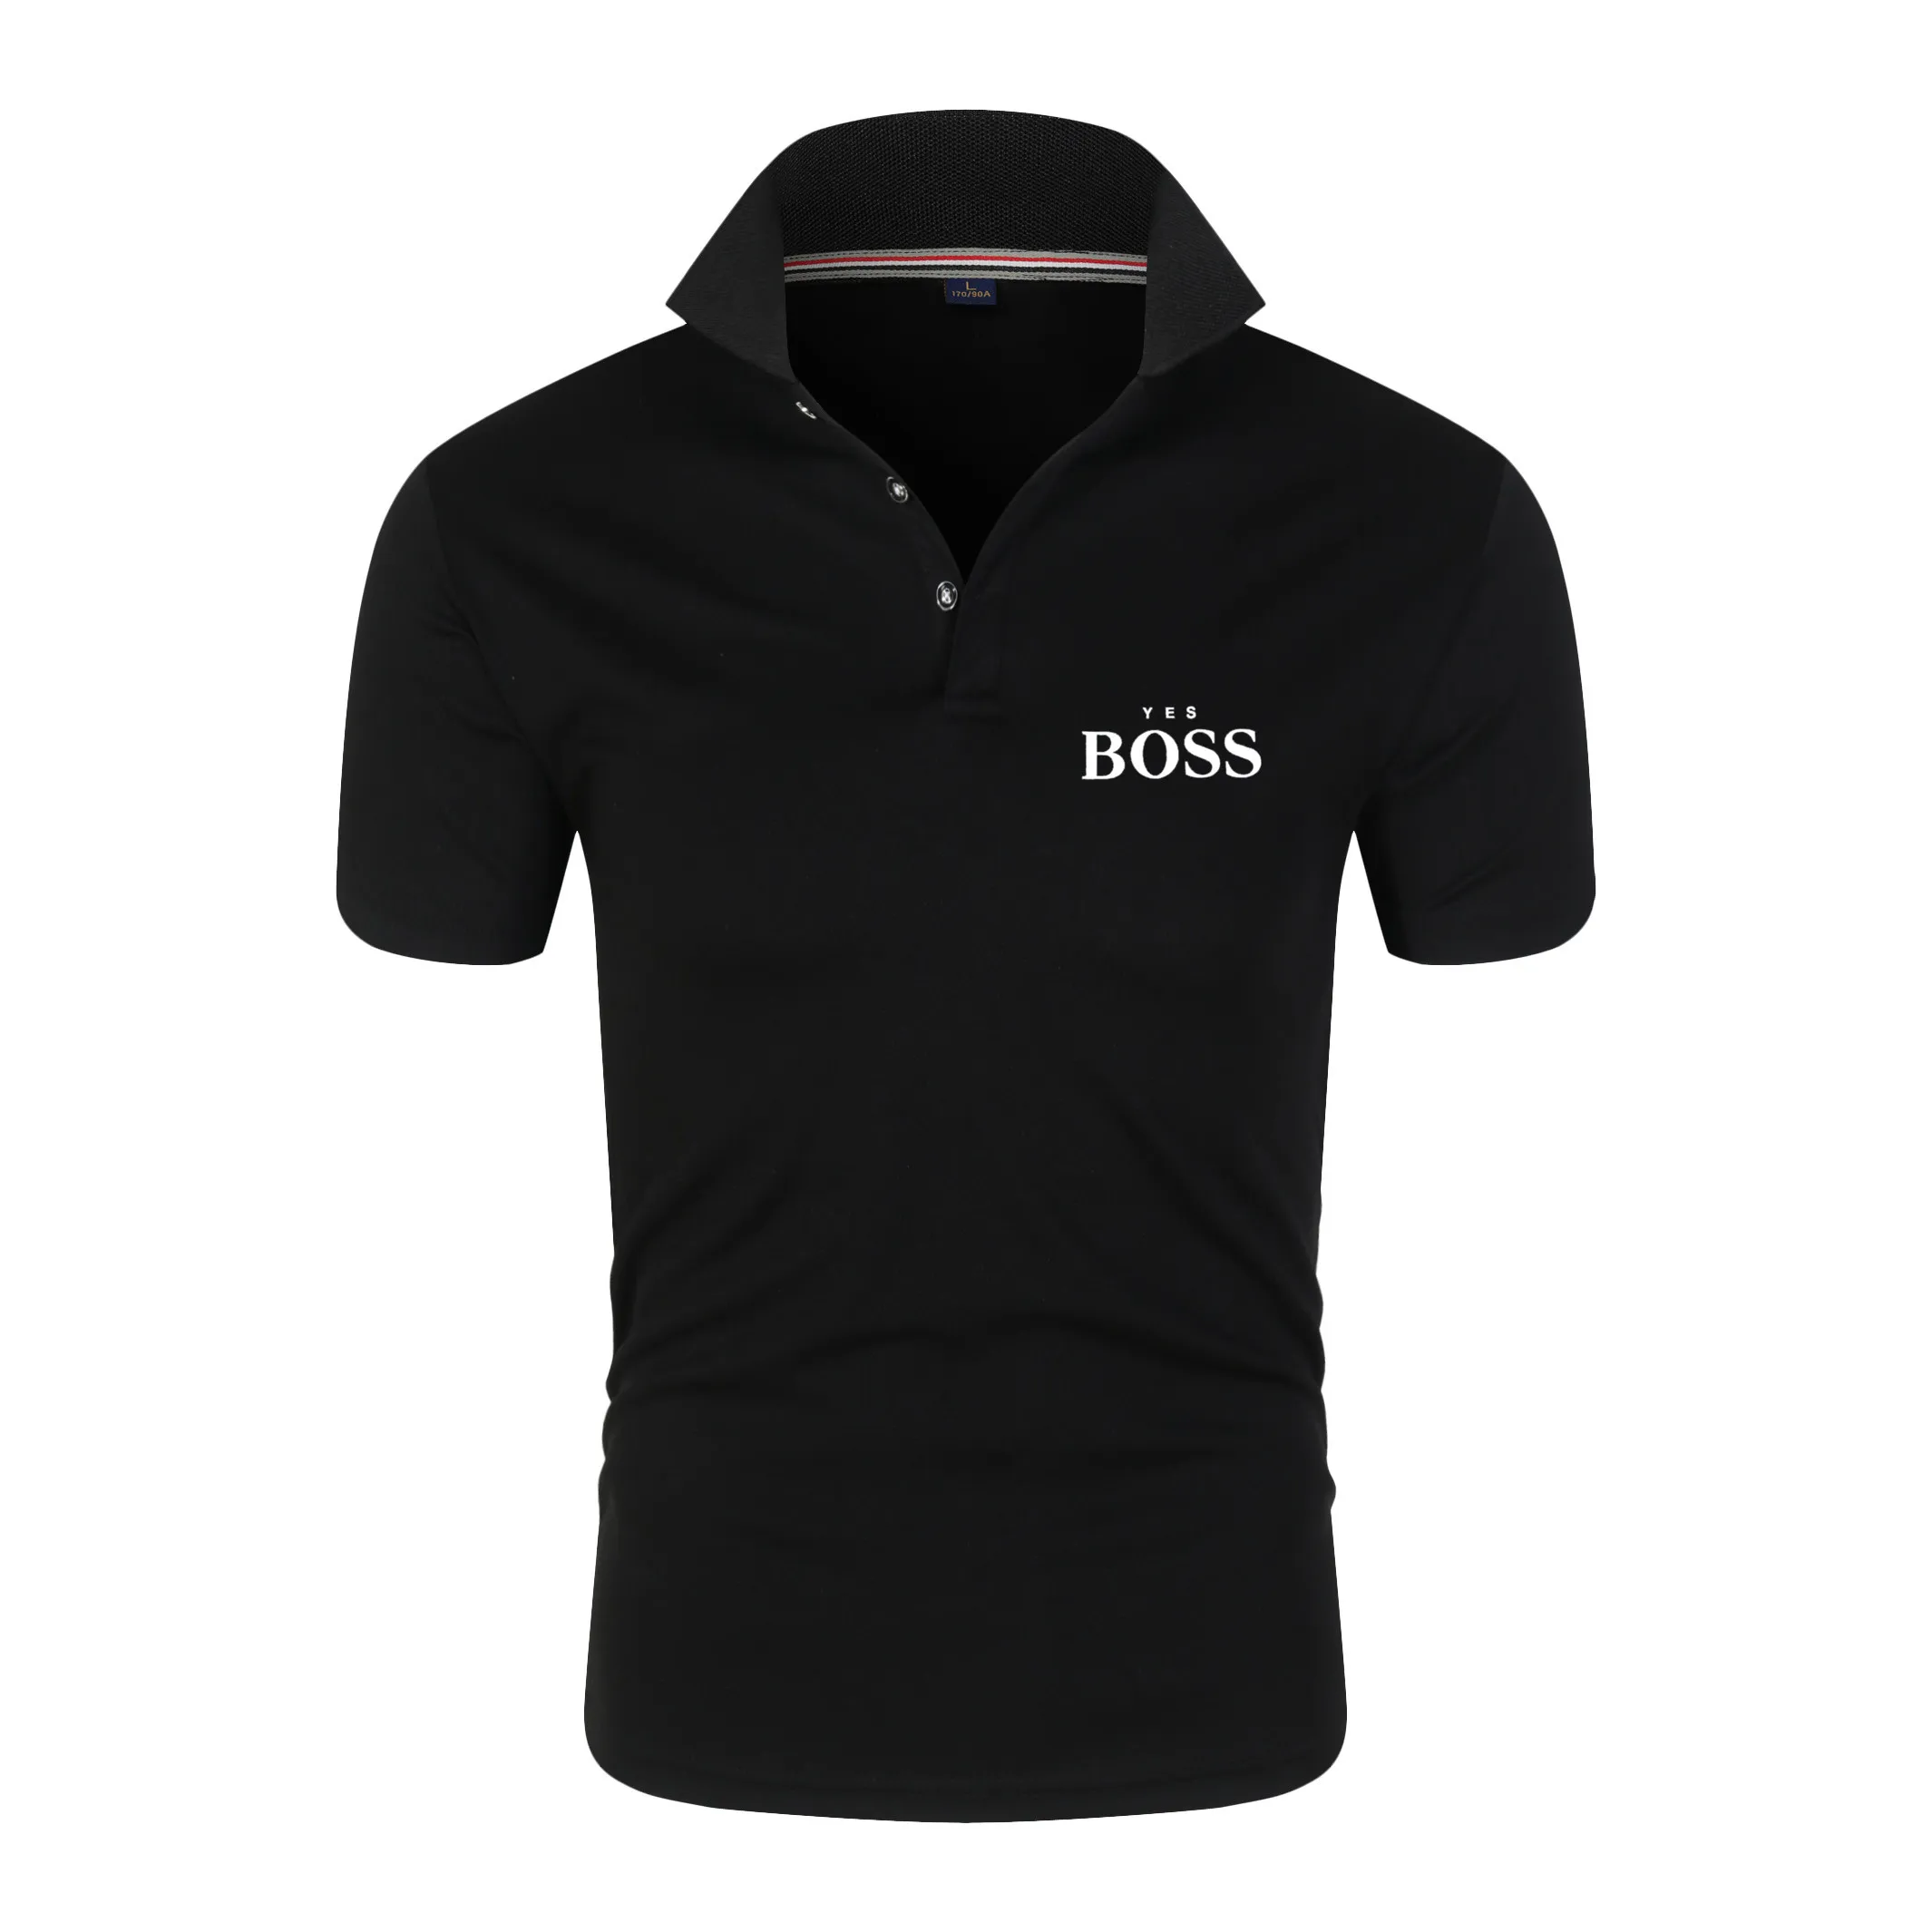 

Men's summer new style is the boss simple Polo shirt 2020 outdoor sportswear short sleeve Polos badminton running football unifo